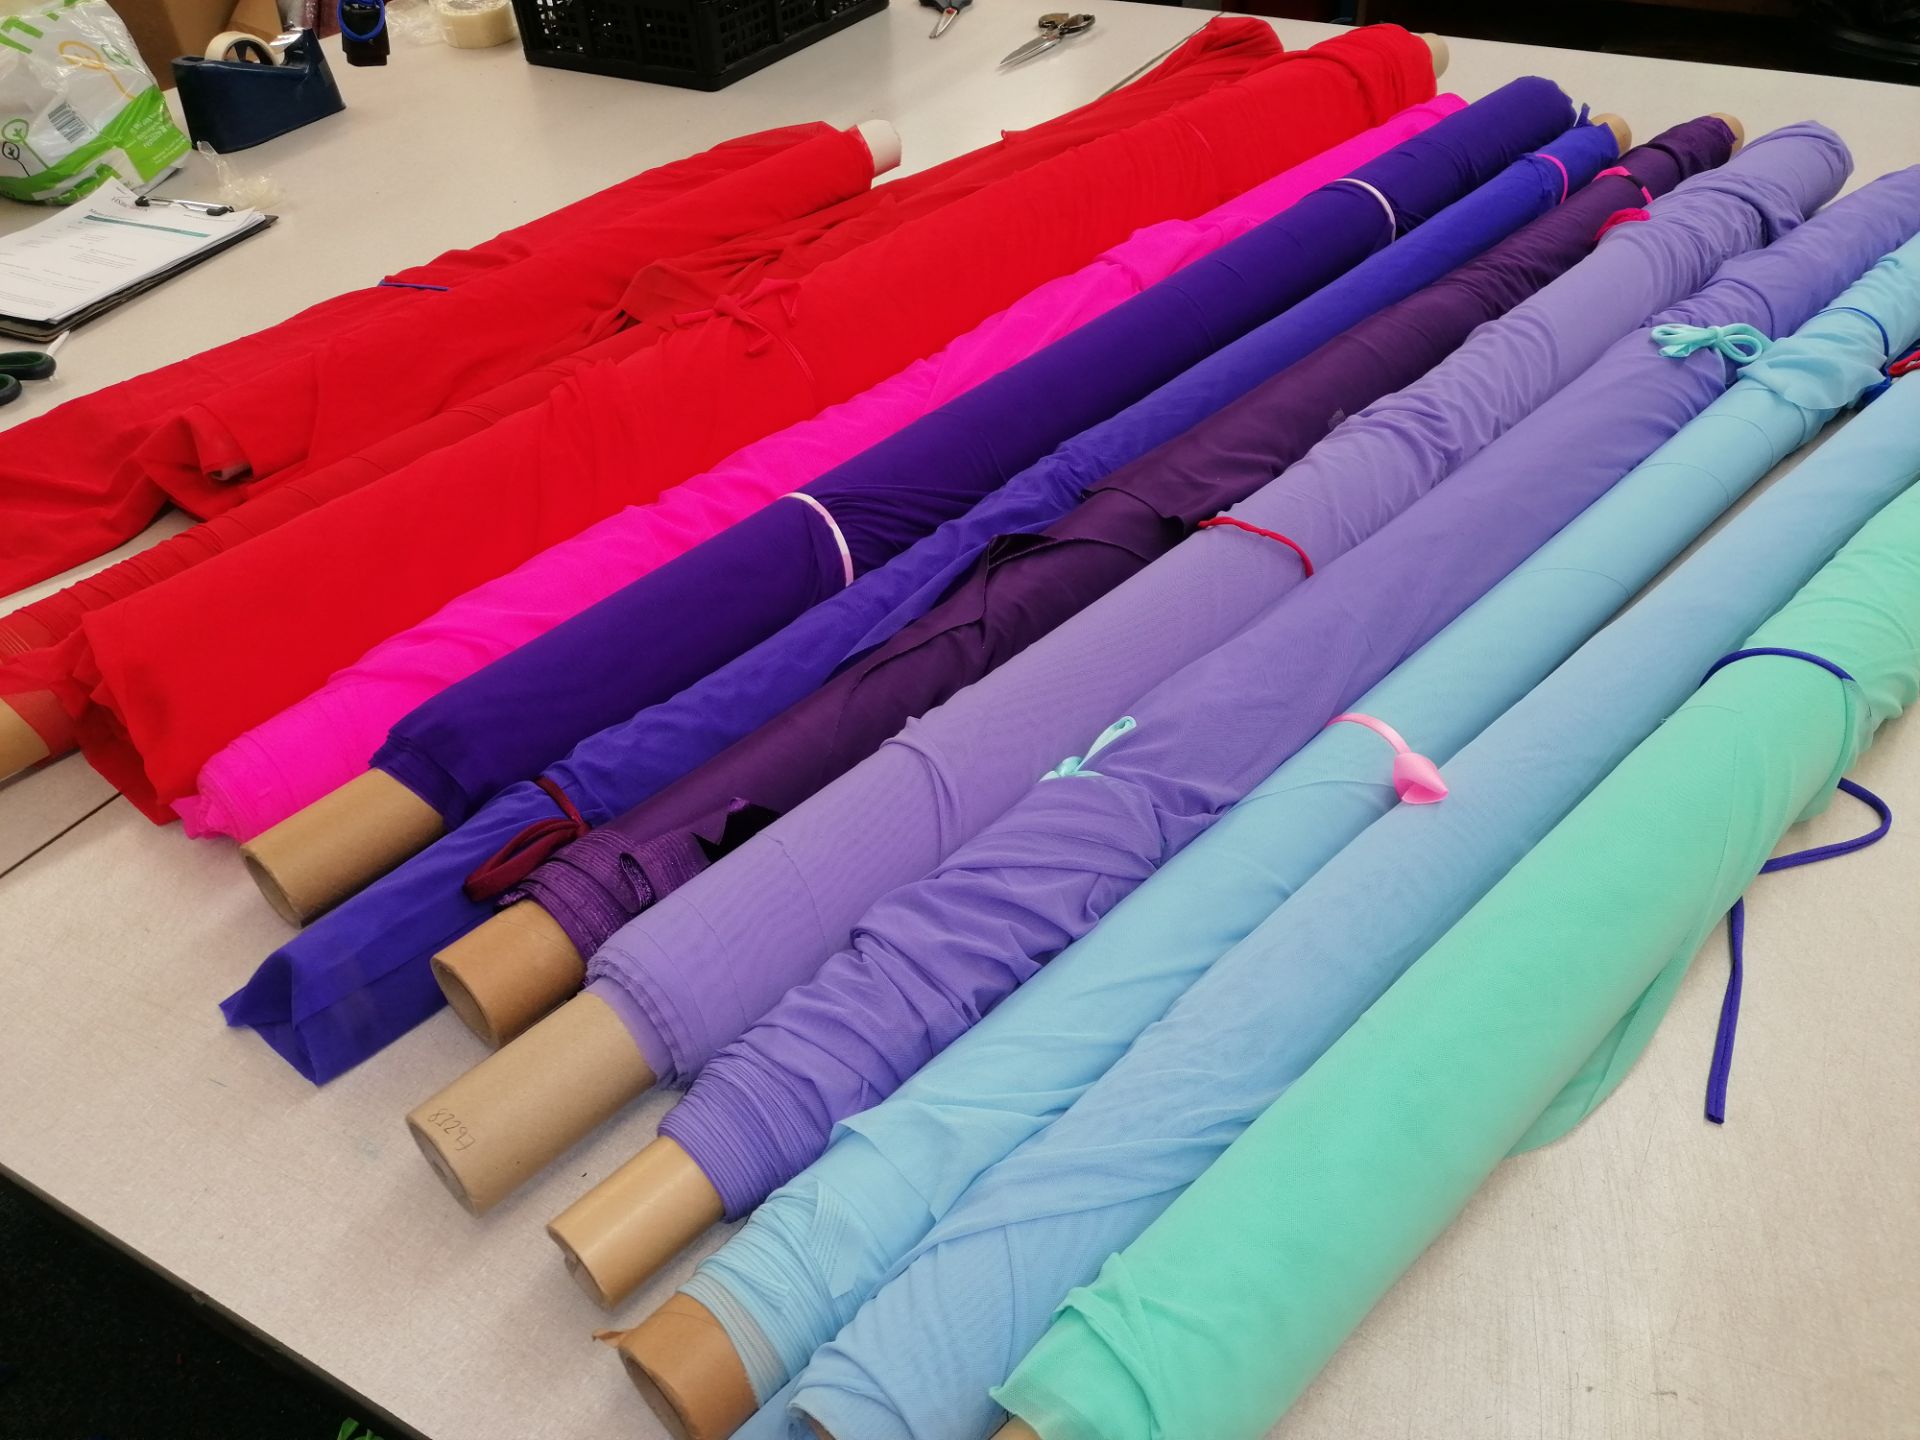 95m Estimated stretch mesh fabric on 12 rolls. rrp £5-10 per meter